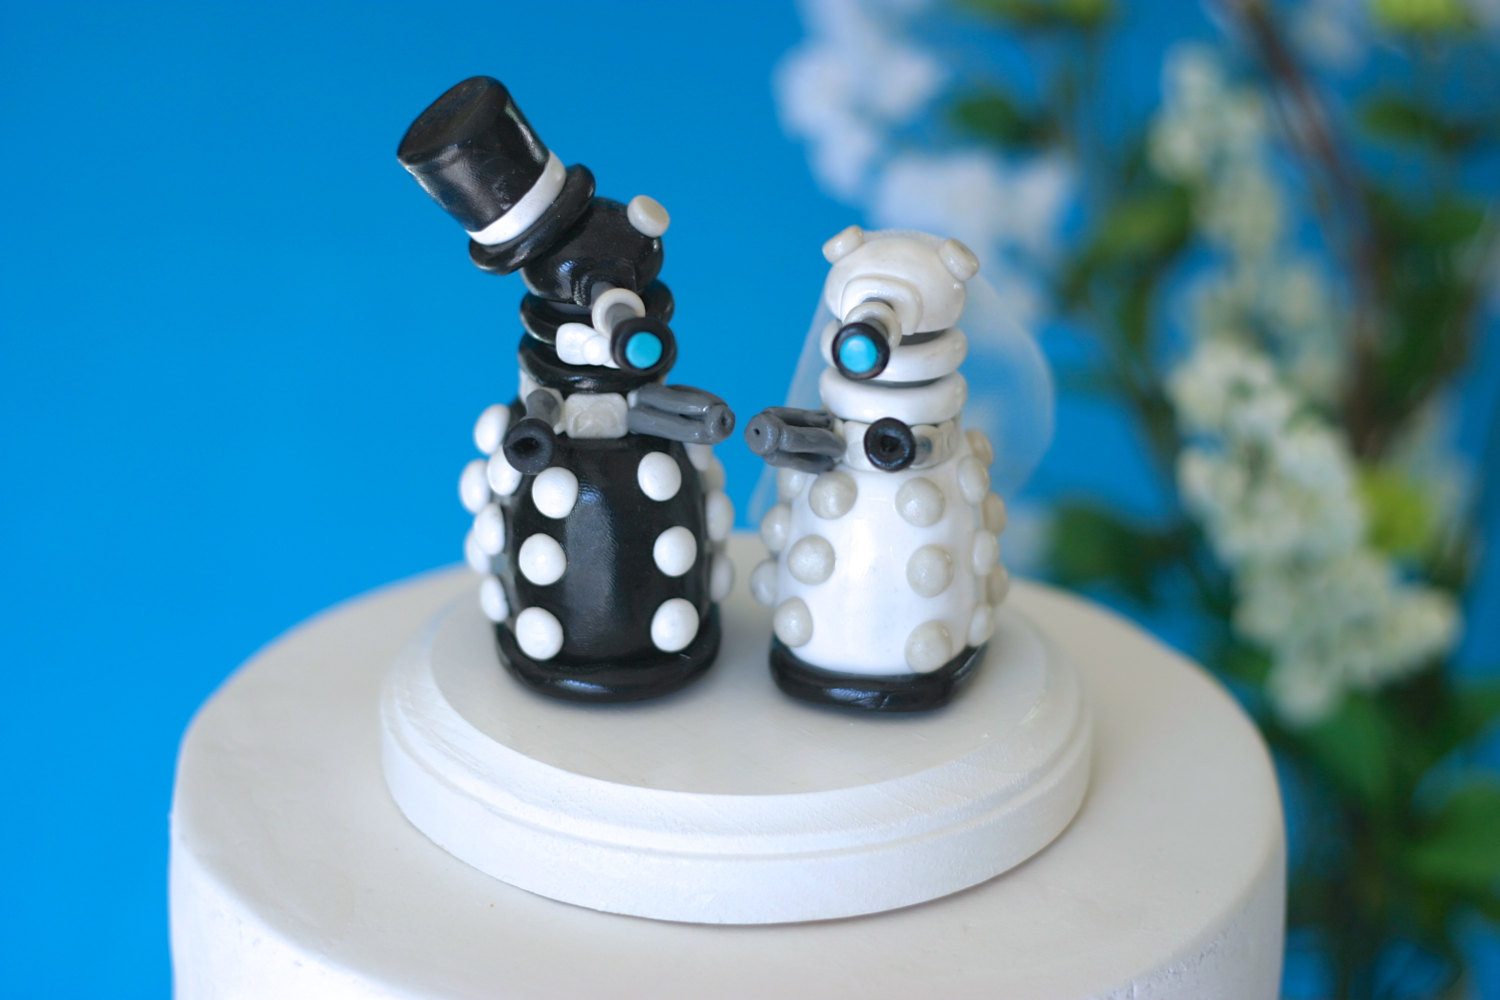 Doctor Who Wedding Cake Topper
 Dalek Cake Topper Custom Wedding Cake Topper Doctor Who